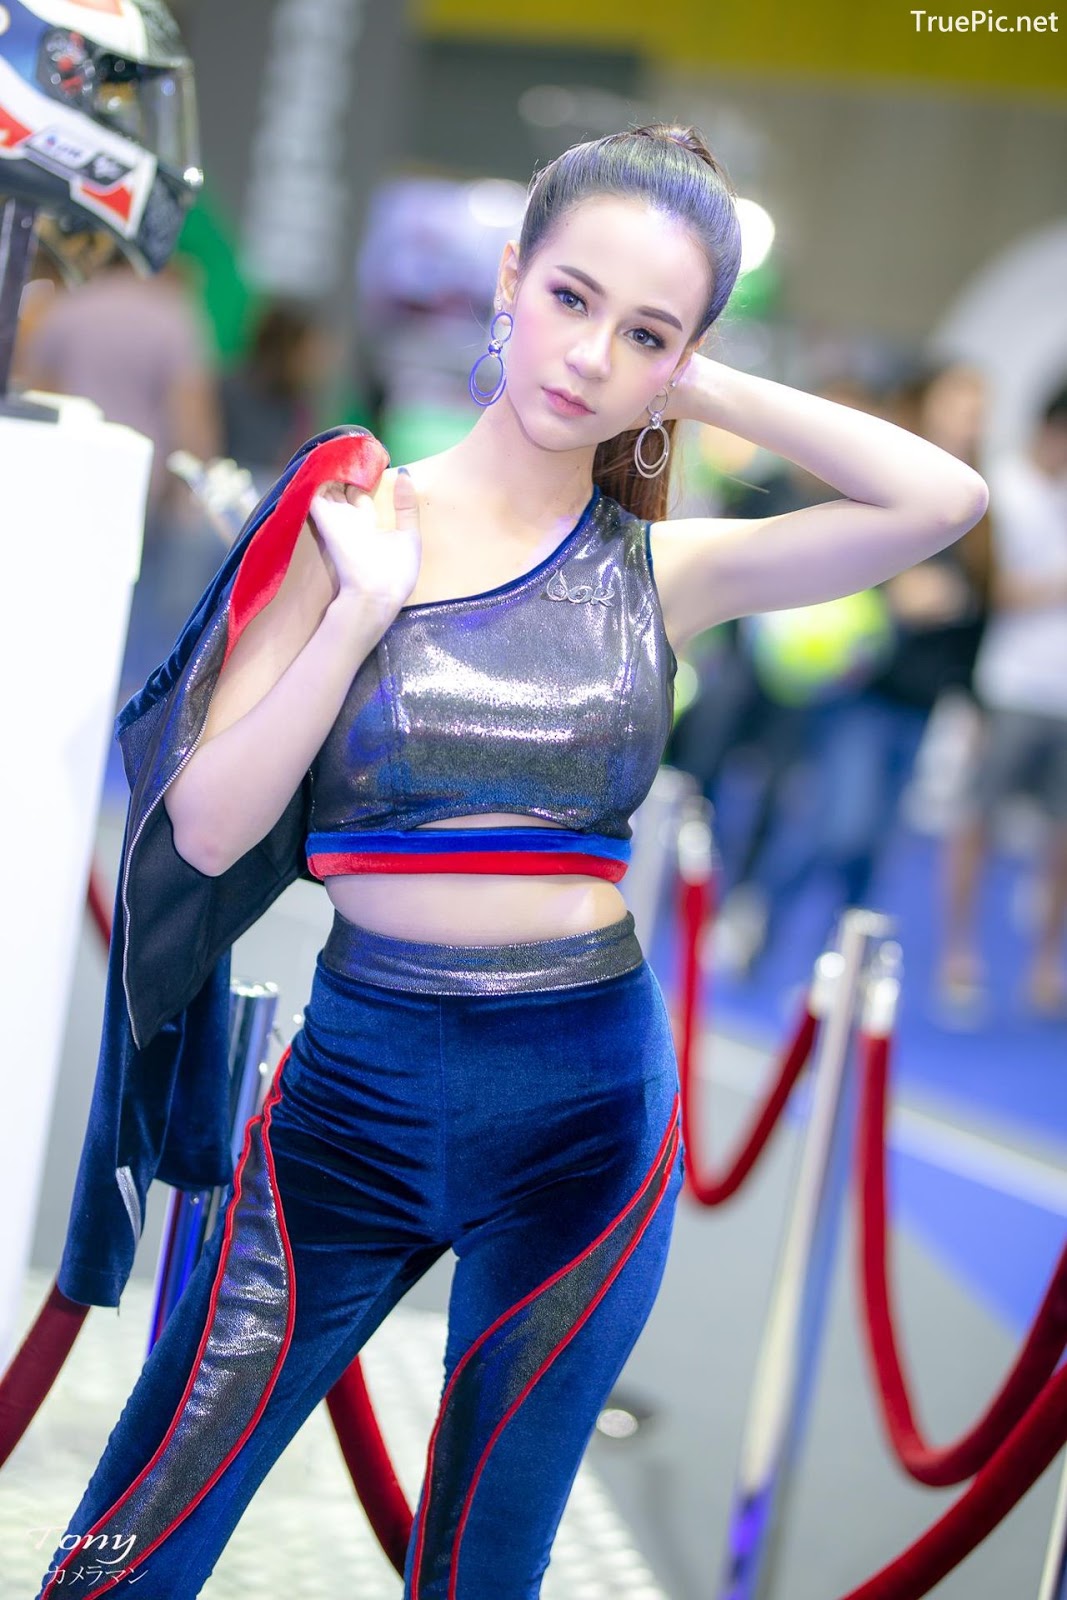 Image-Thailand-Hot-Model-Thai-Racing-Girl-At-Big-Motor-2018-TruePic.net- Picture-14